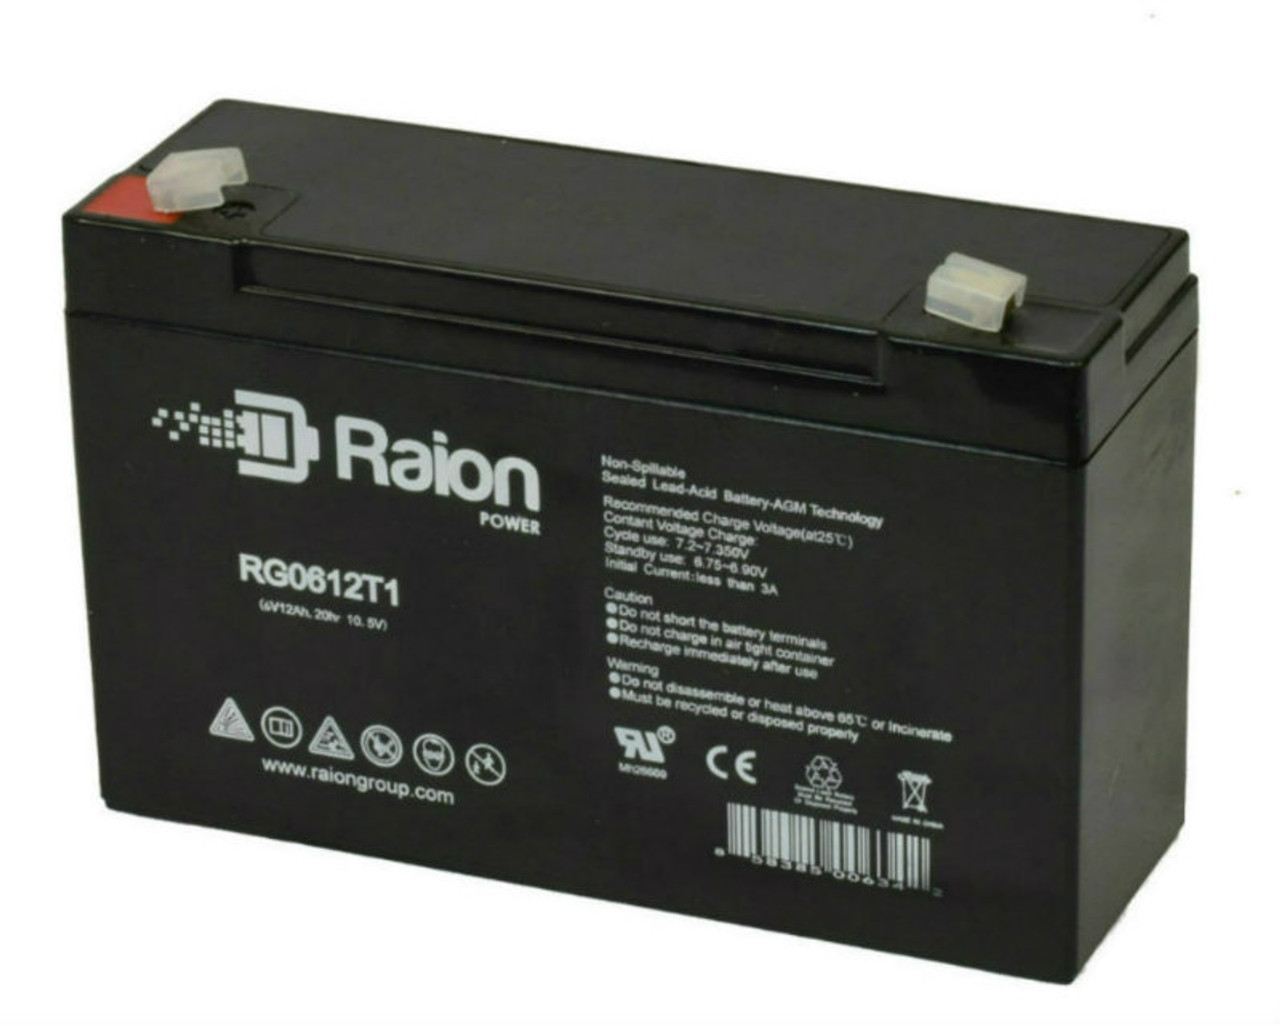 Raion Power RG06120T1 Replacement 6V 12Ah Emergency Light Battery for Sentry Lite PM6100